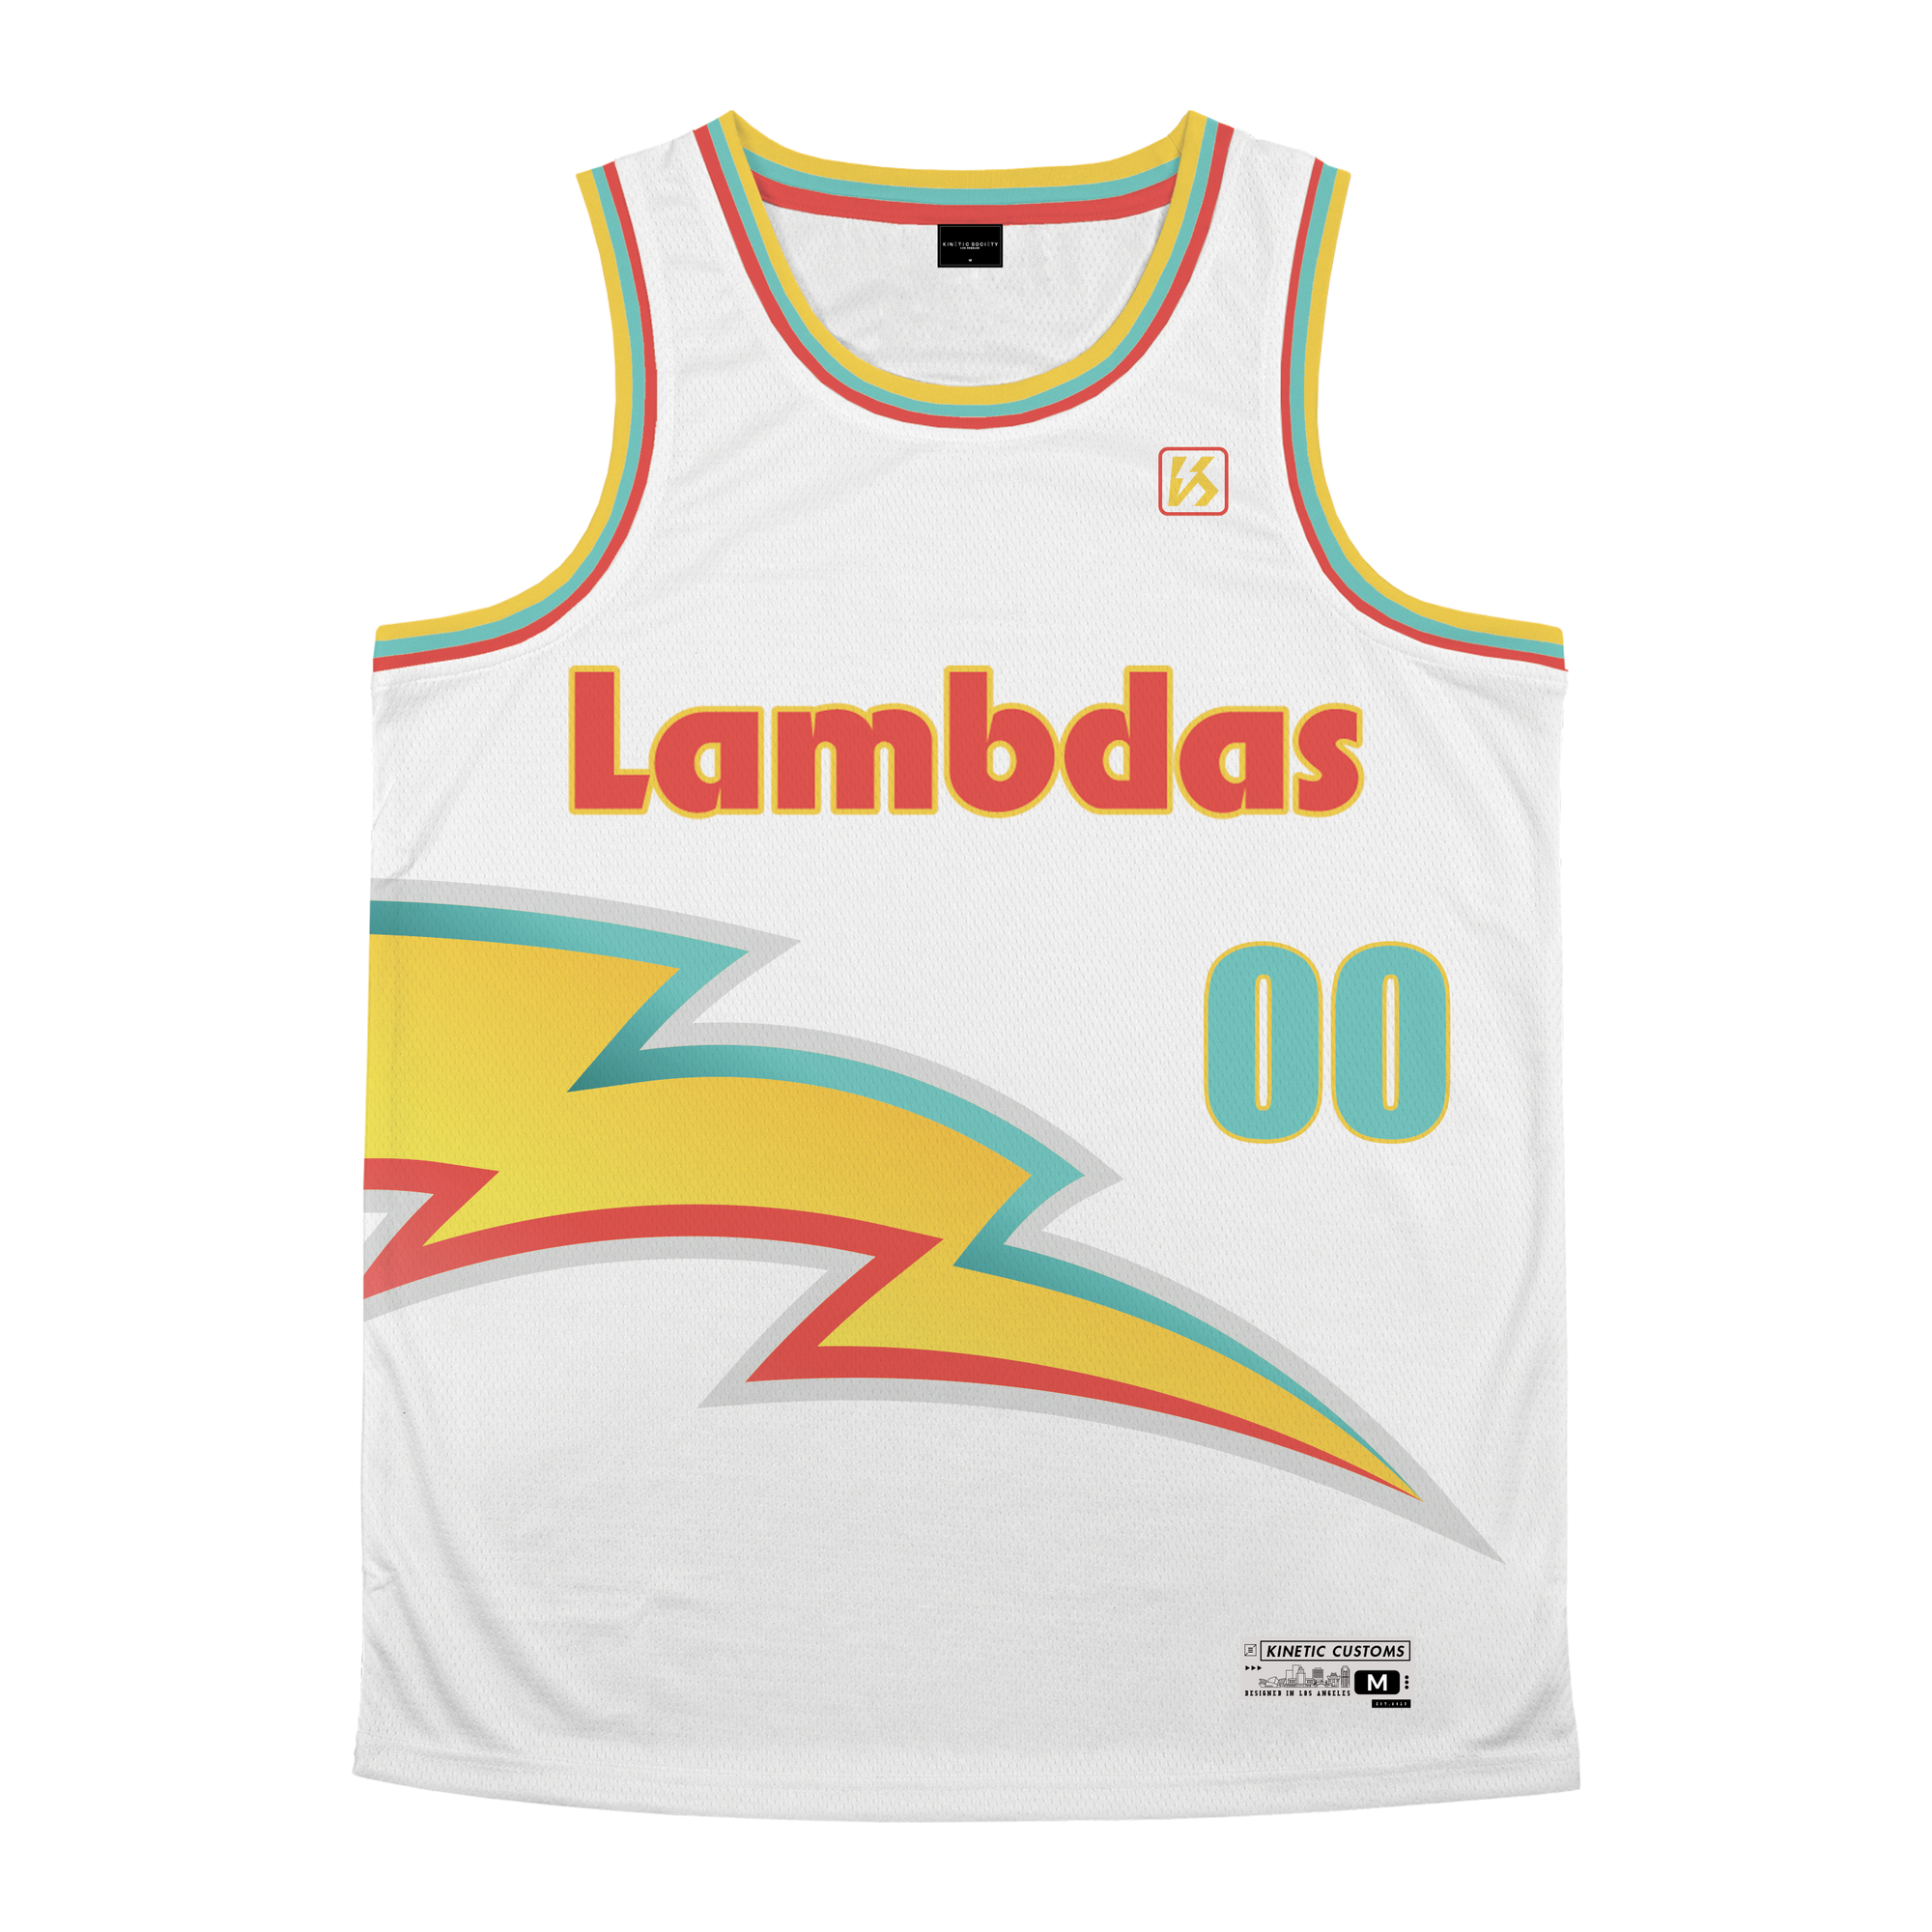 Lambda Phi Epsilon - Bolt Basketball Jersey